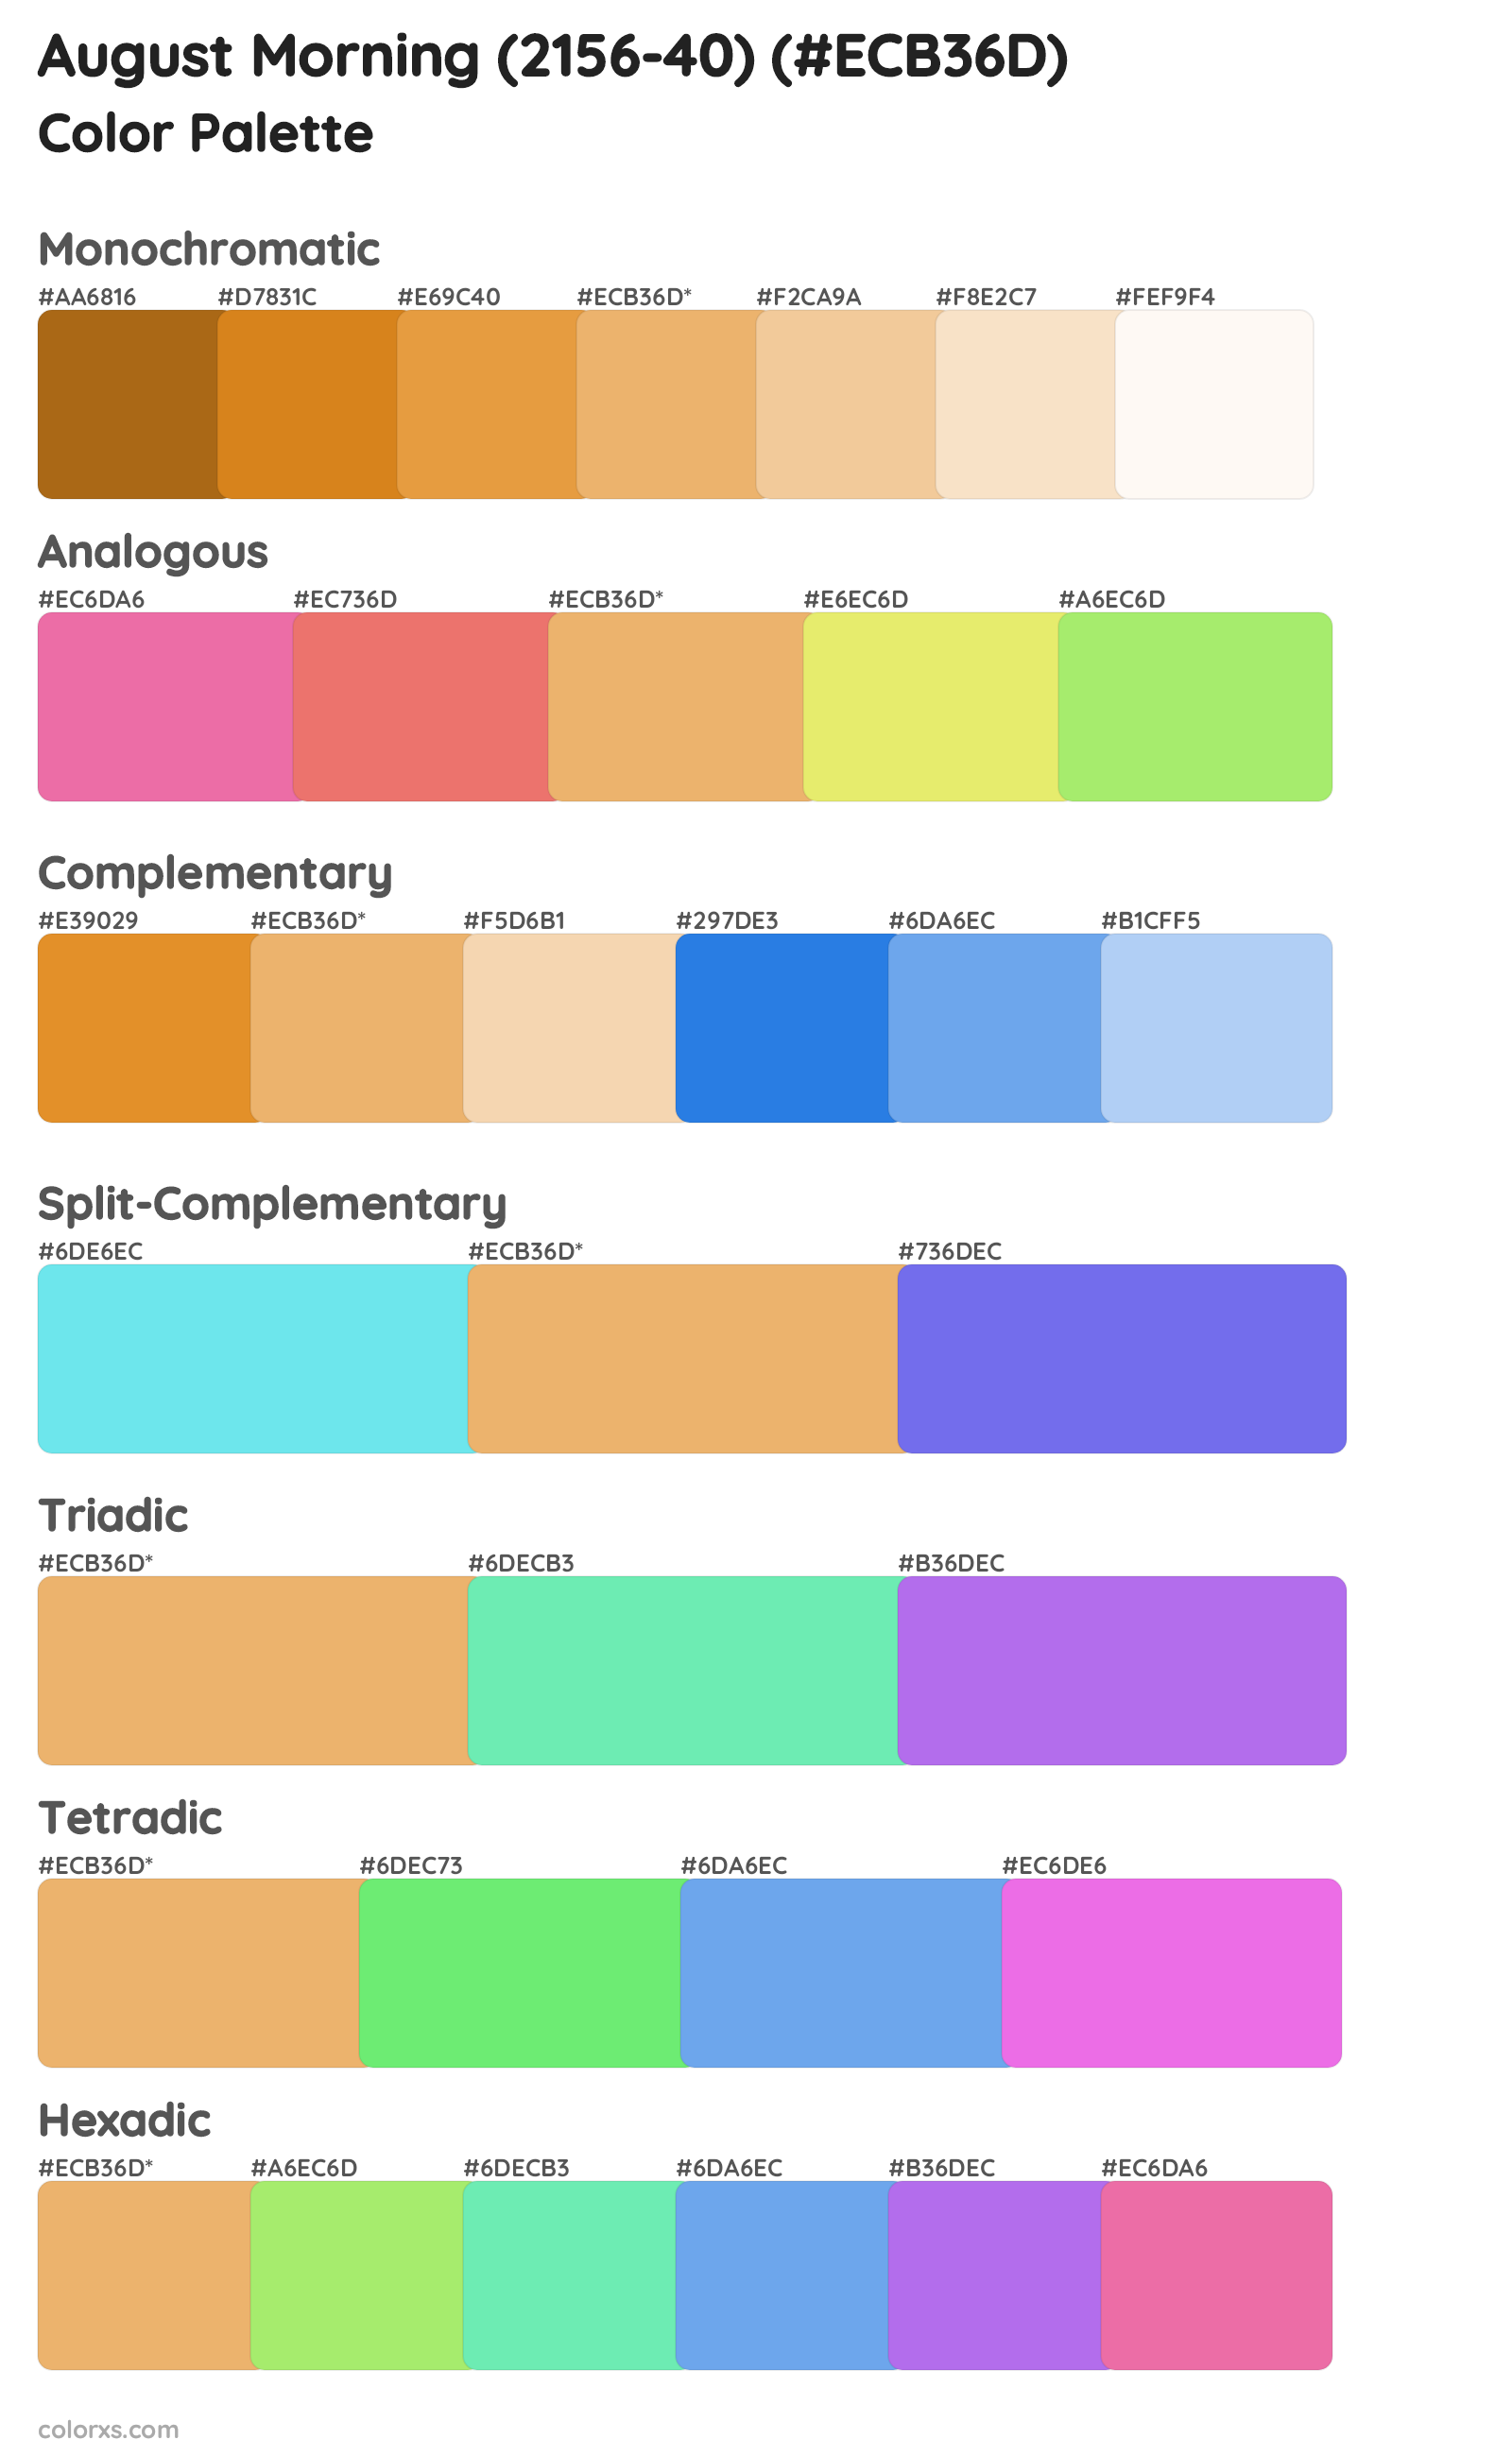 August Morning (2156-40) Color Scheme Palettes